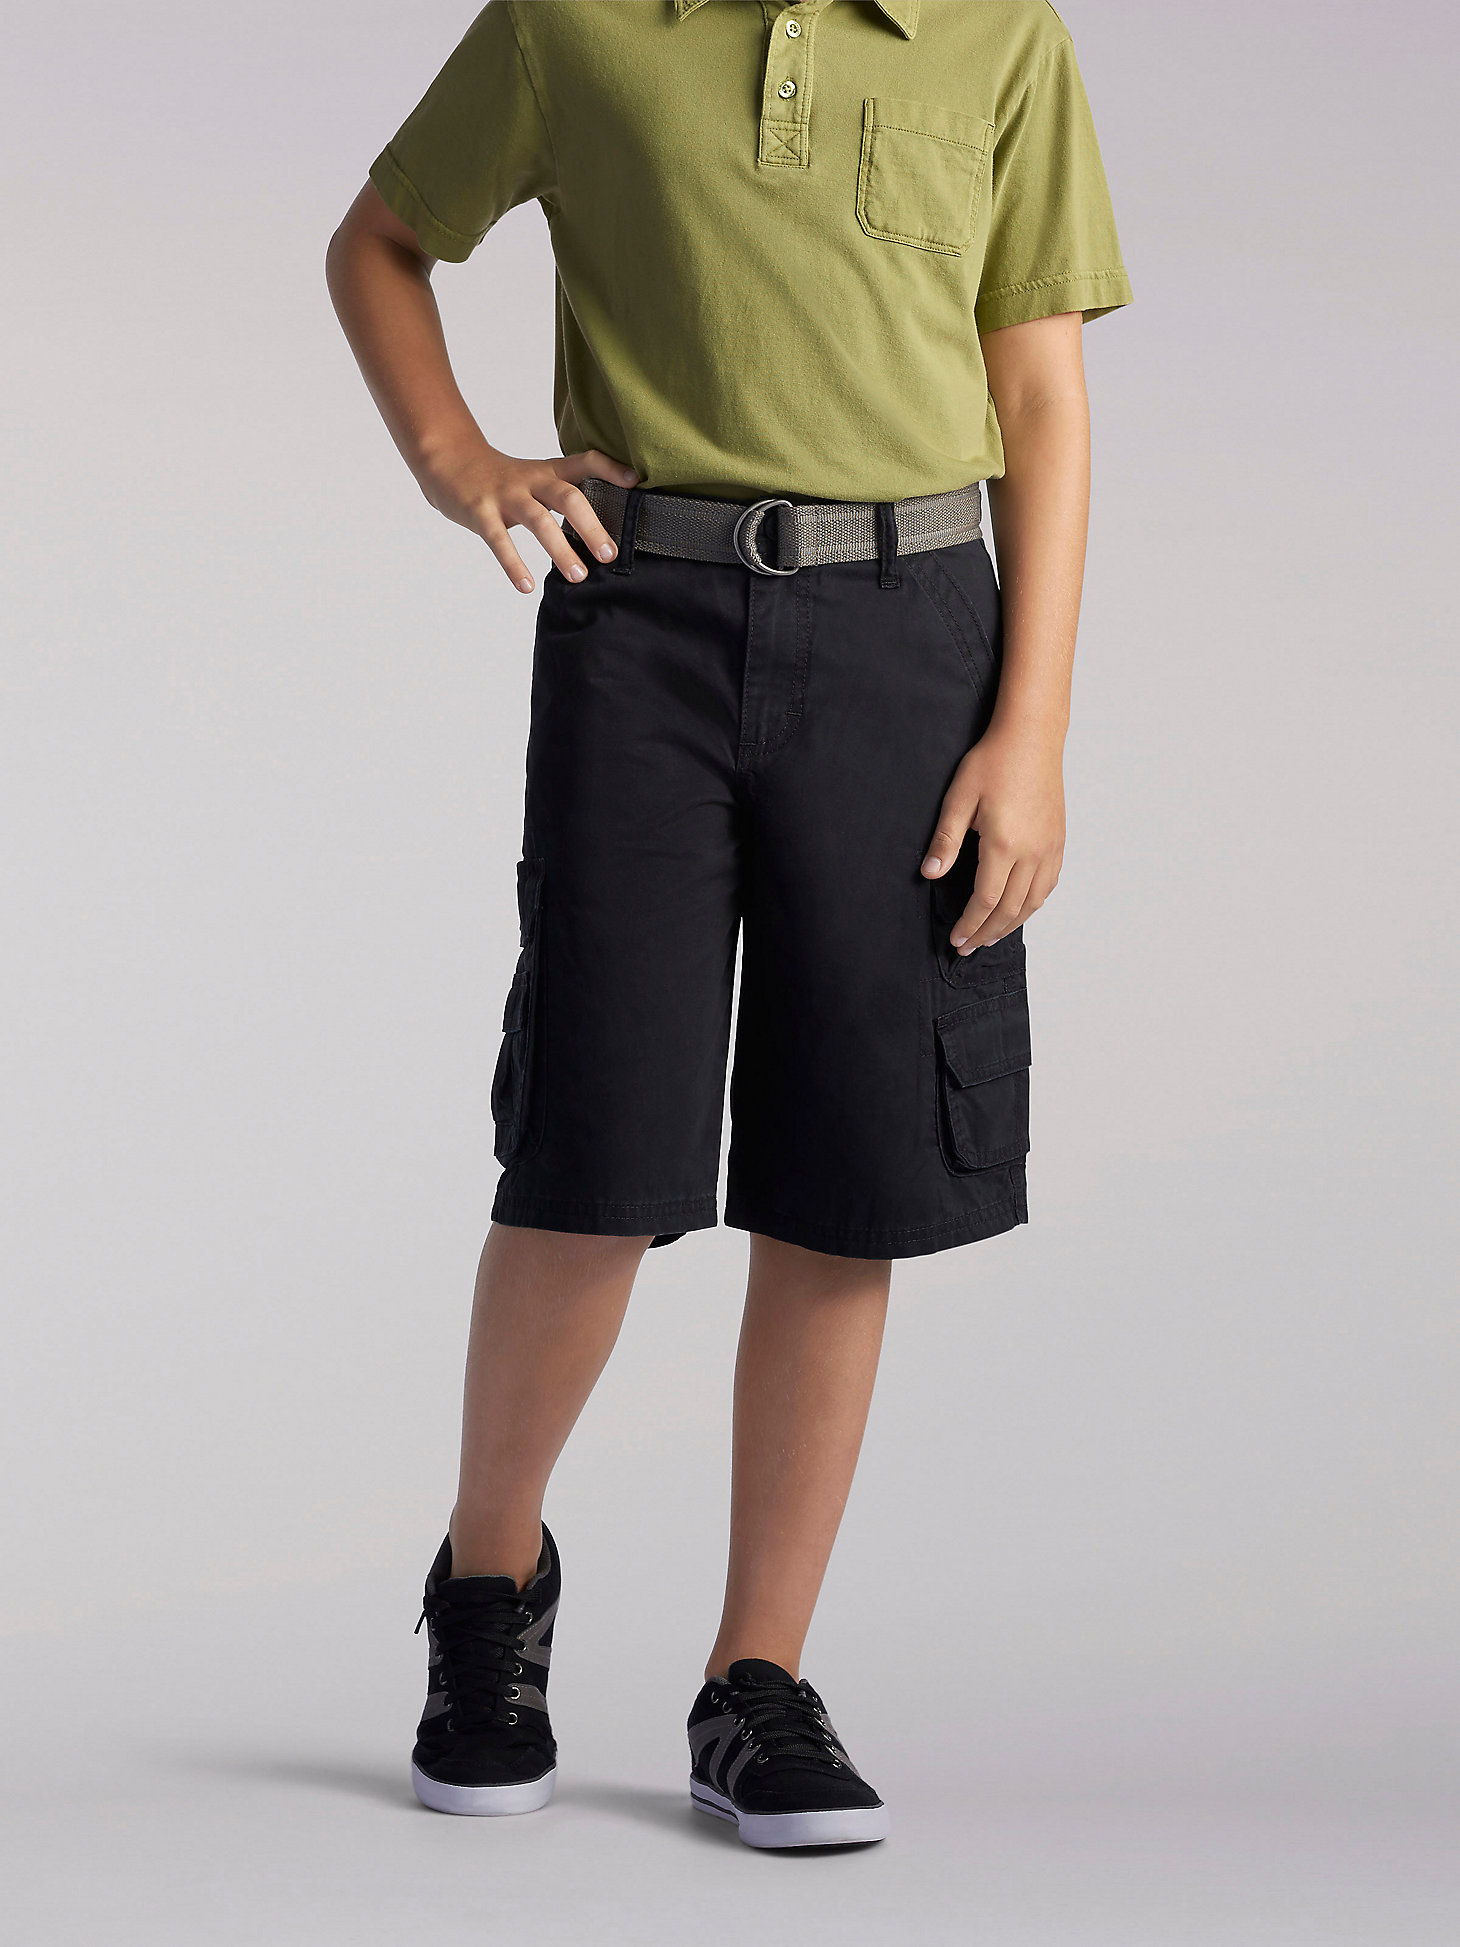 Lee Dungarees Kids Knit Waist Cargo Shorts 